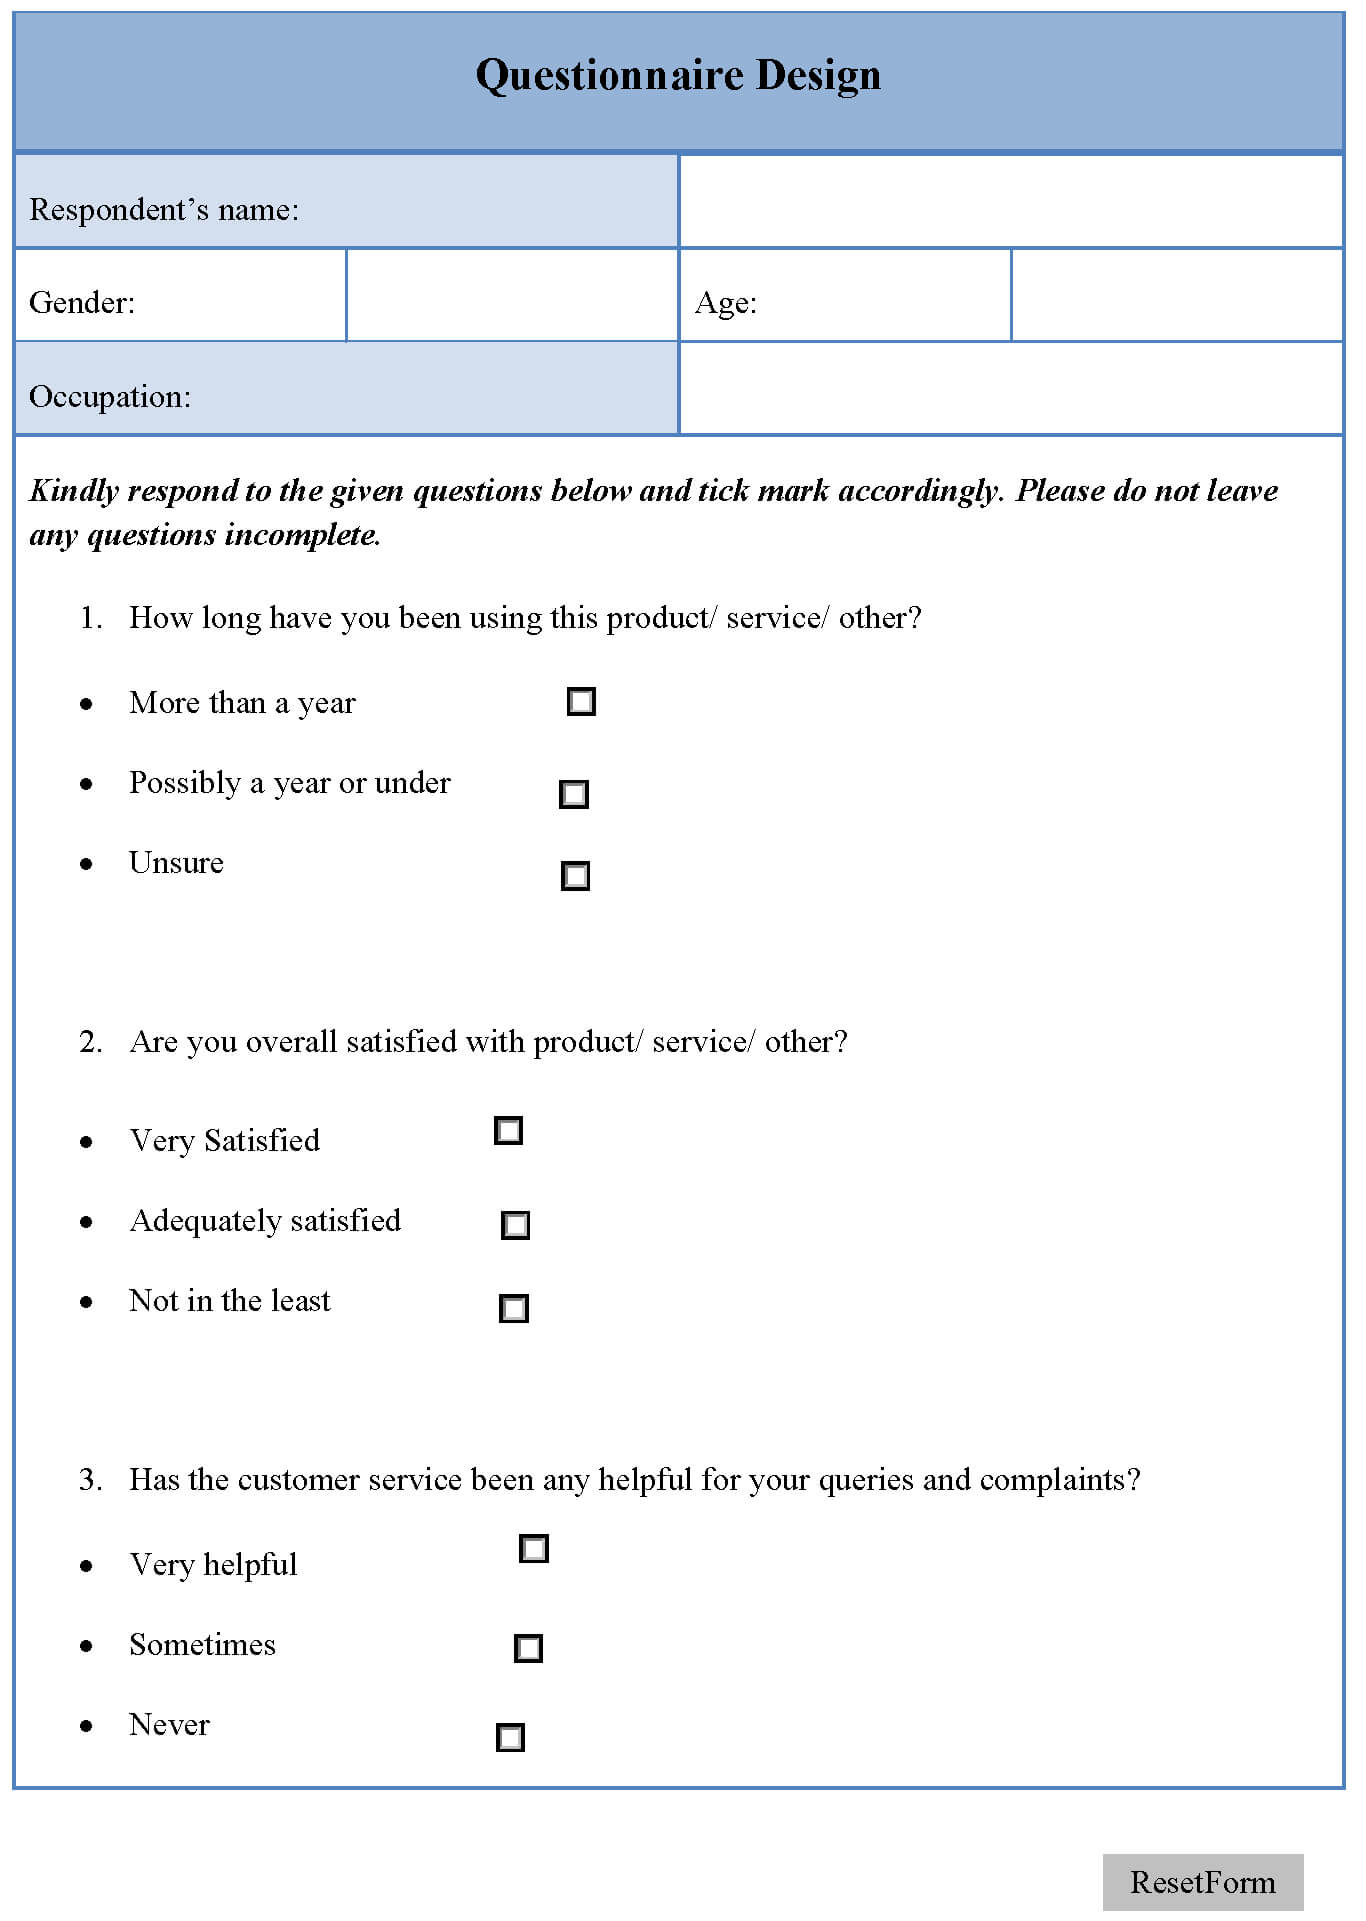 Questionnaire Design Template | Editable Forms Regarding Questionnaire Design Template Word